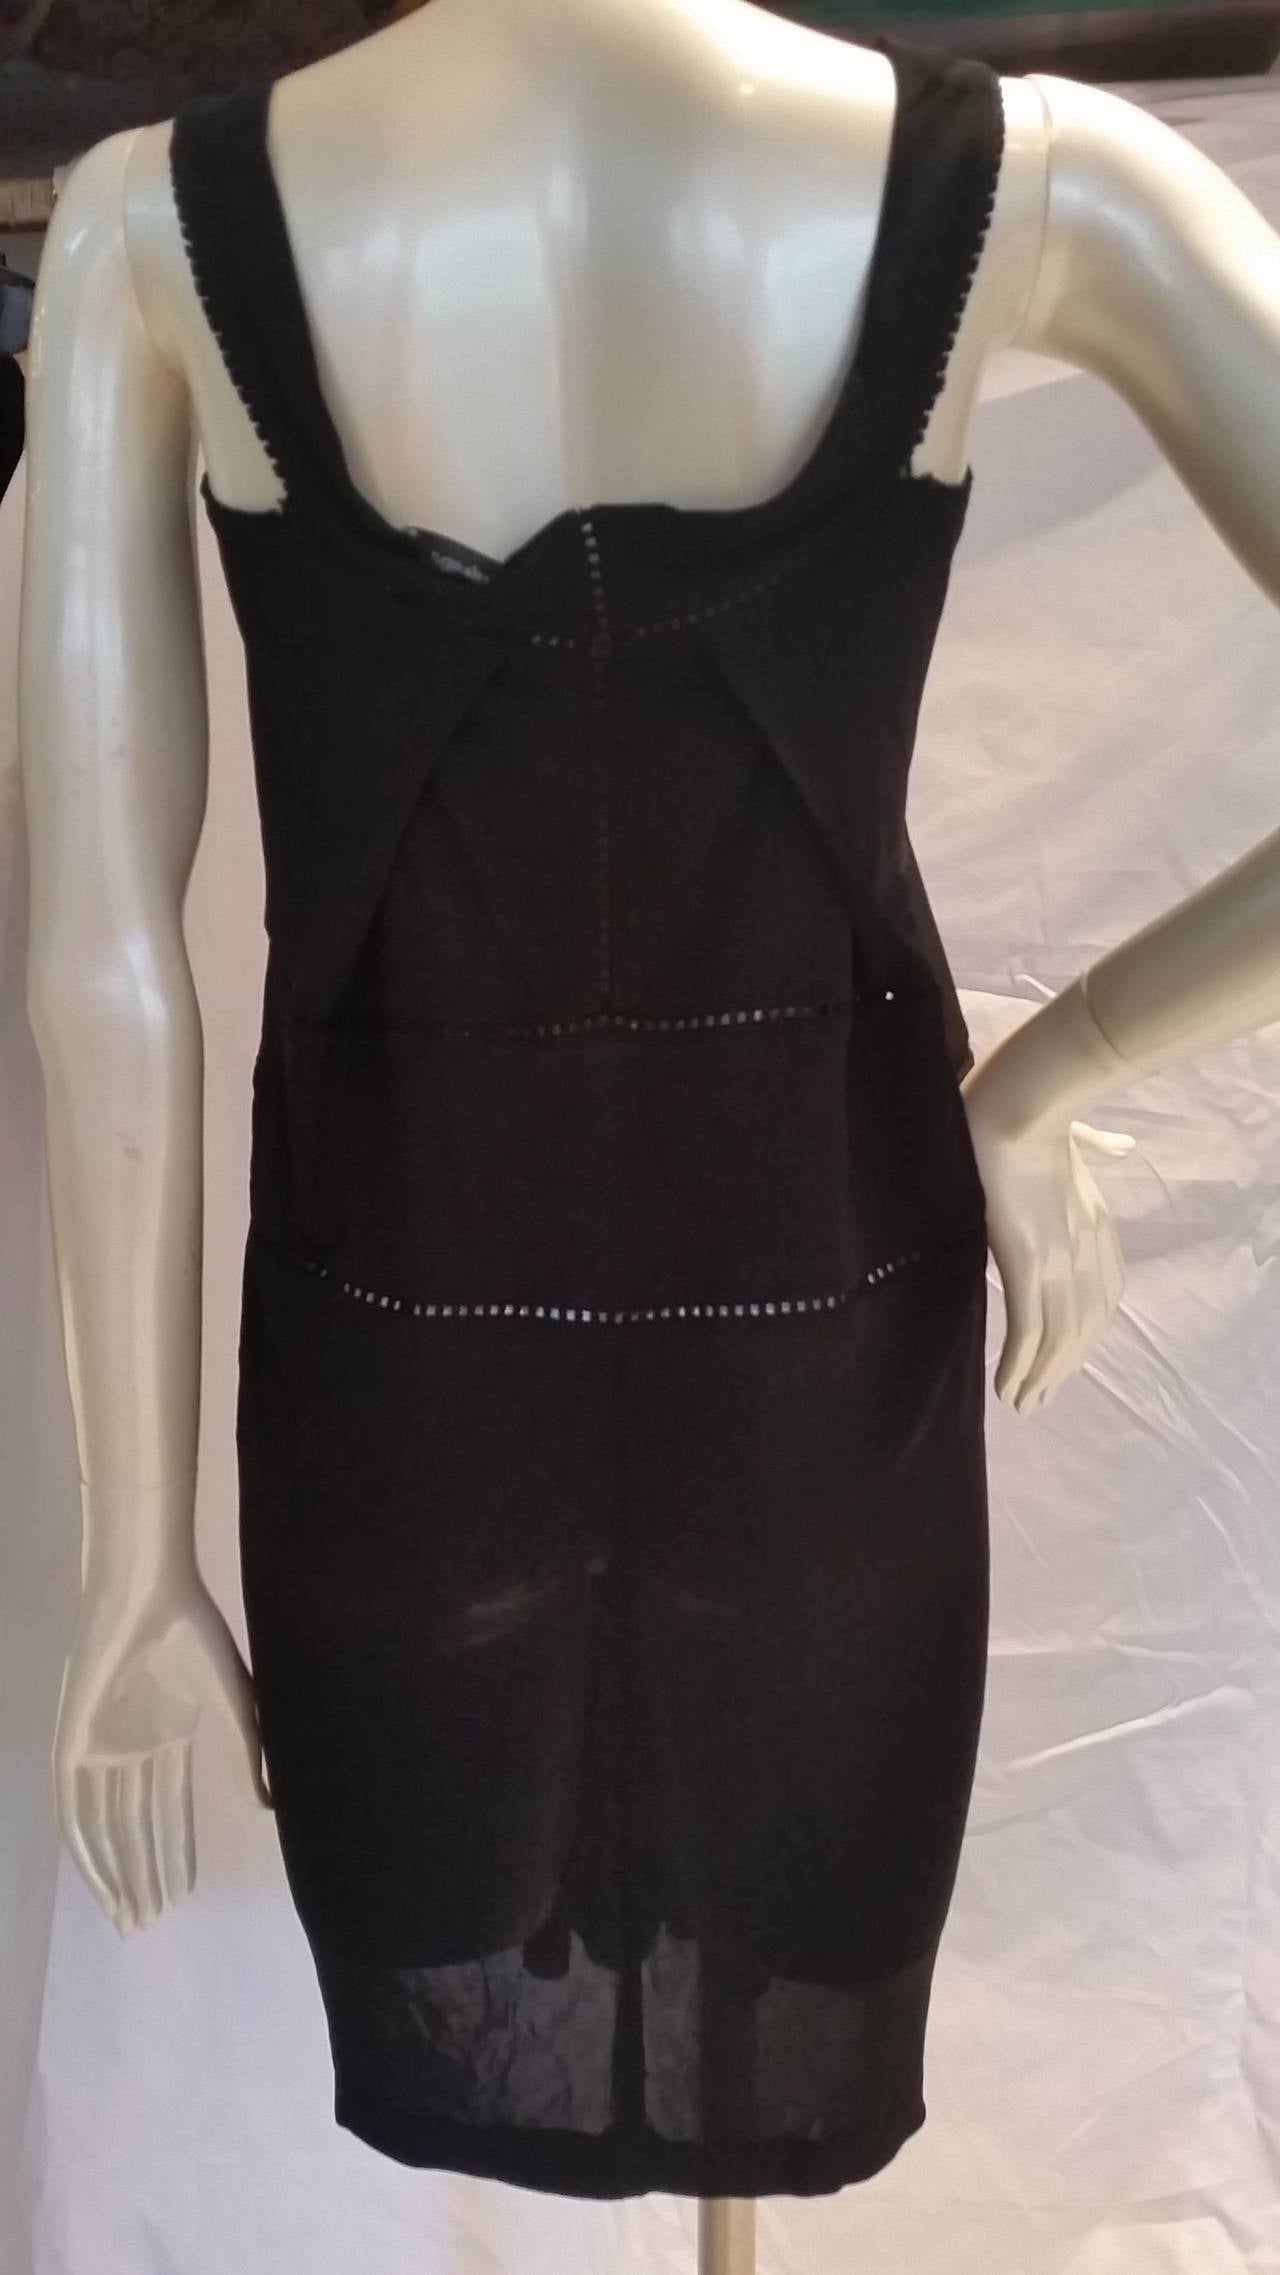 2007 Saint Laurent rive gauche black dress still with tags
Two tasks